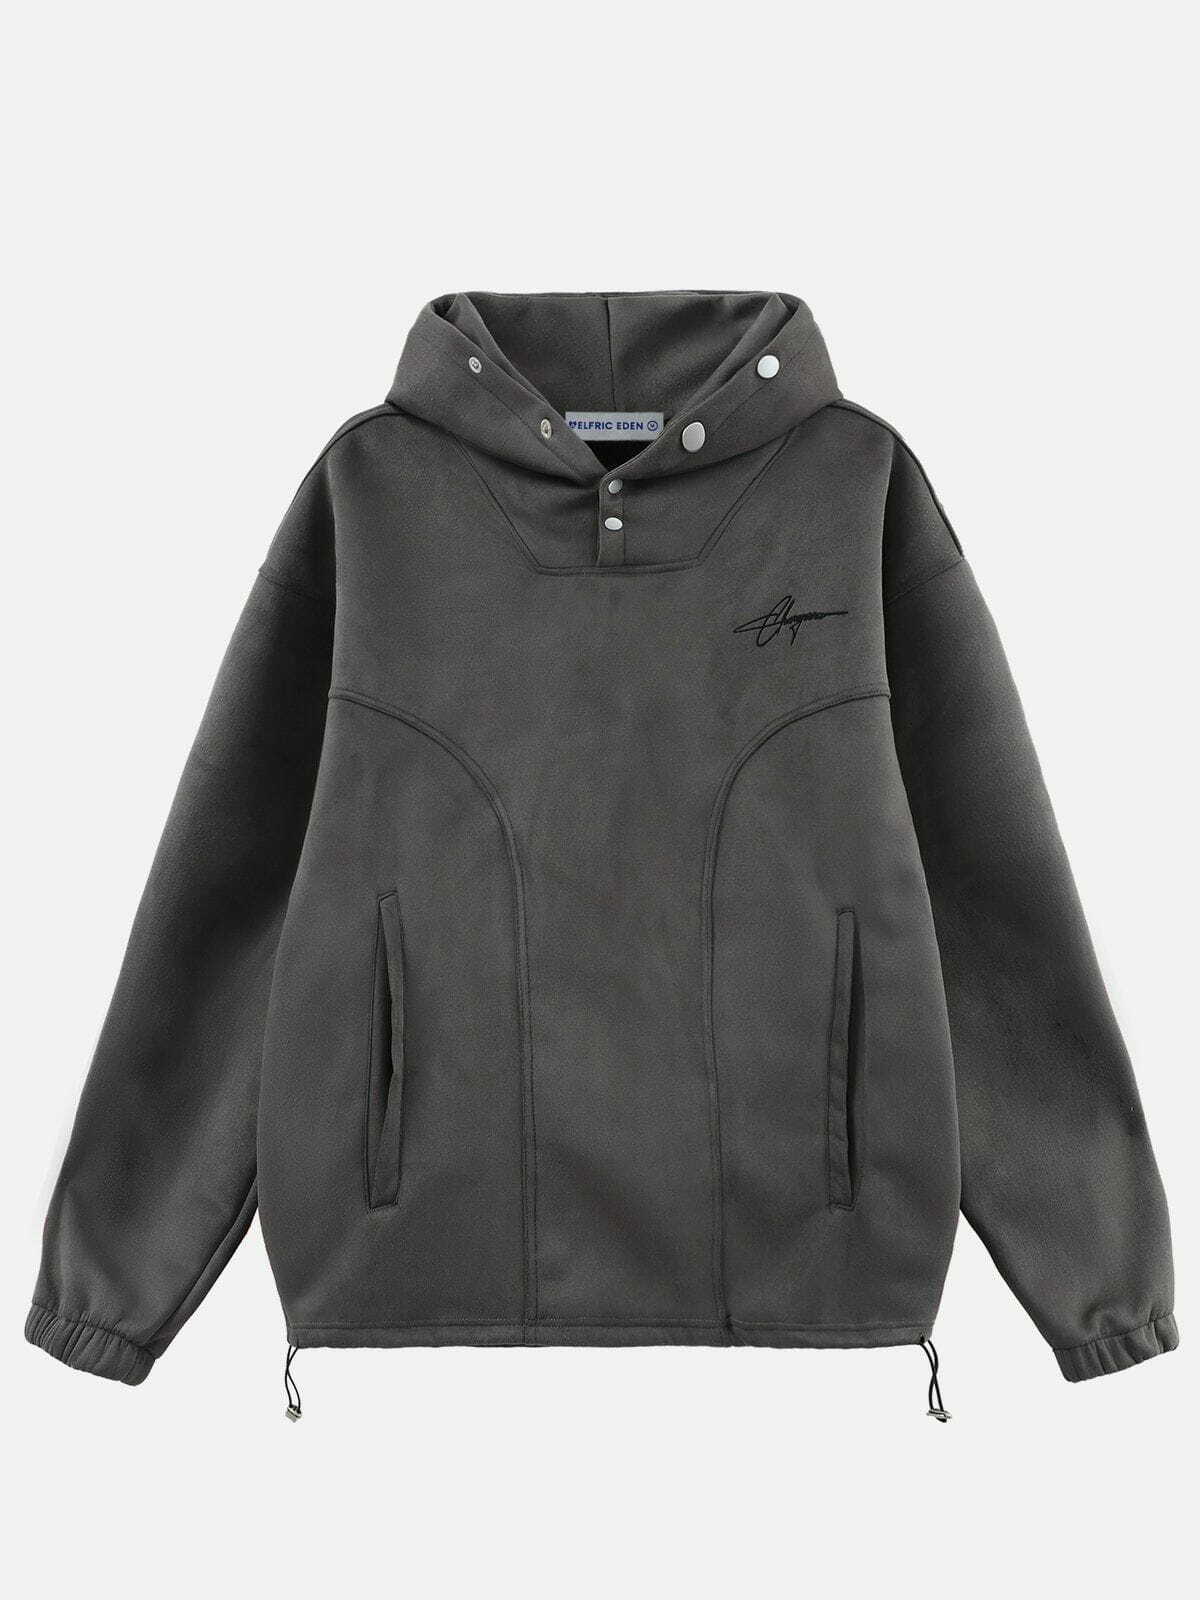 suede hoodie urban chic streetwear icon 5624